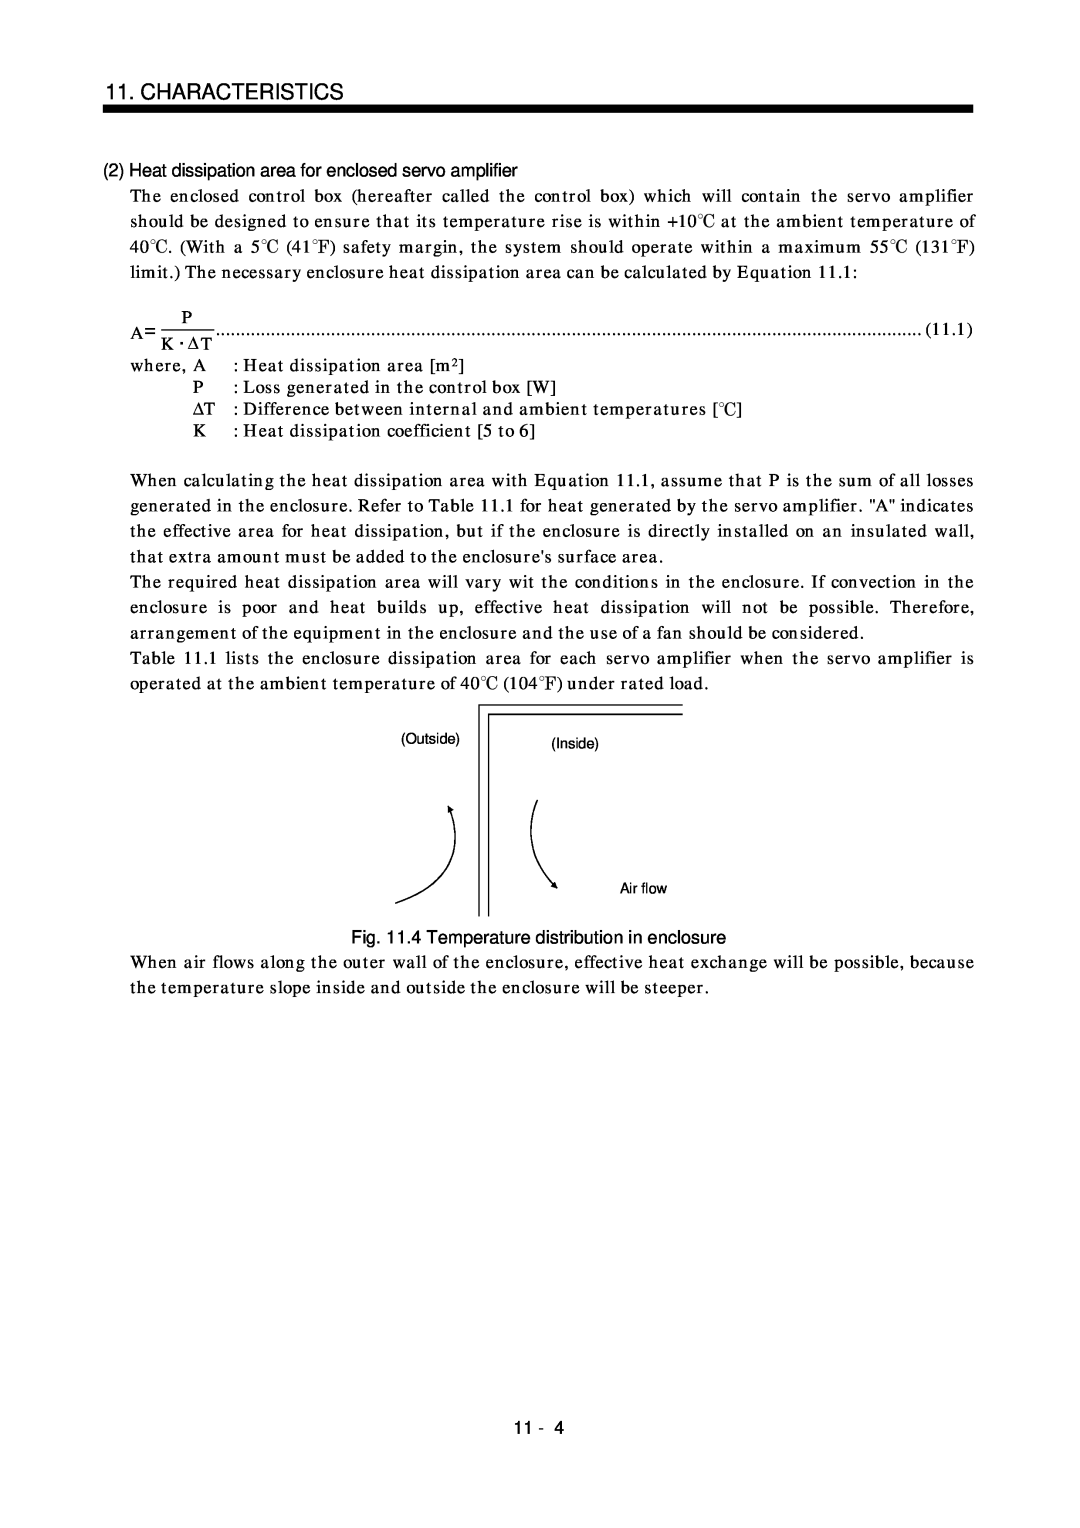 Bose MR-J2S- B instruction manual 4 Temperature distribution in enclosure, Characteristics, 11 